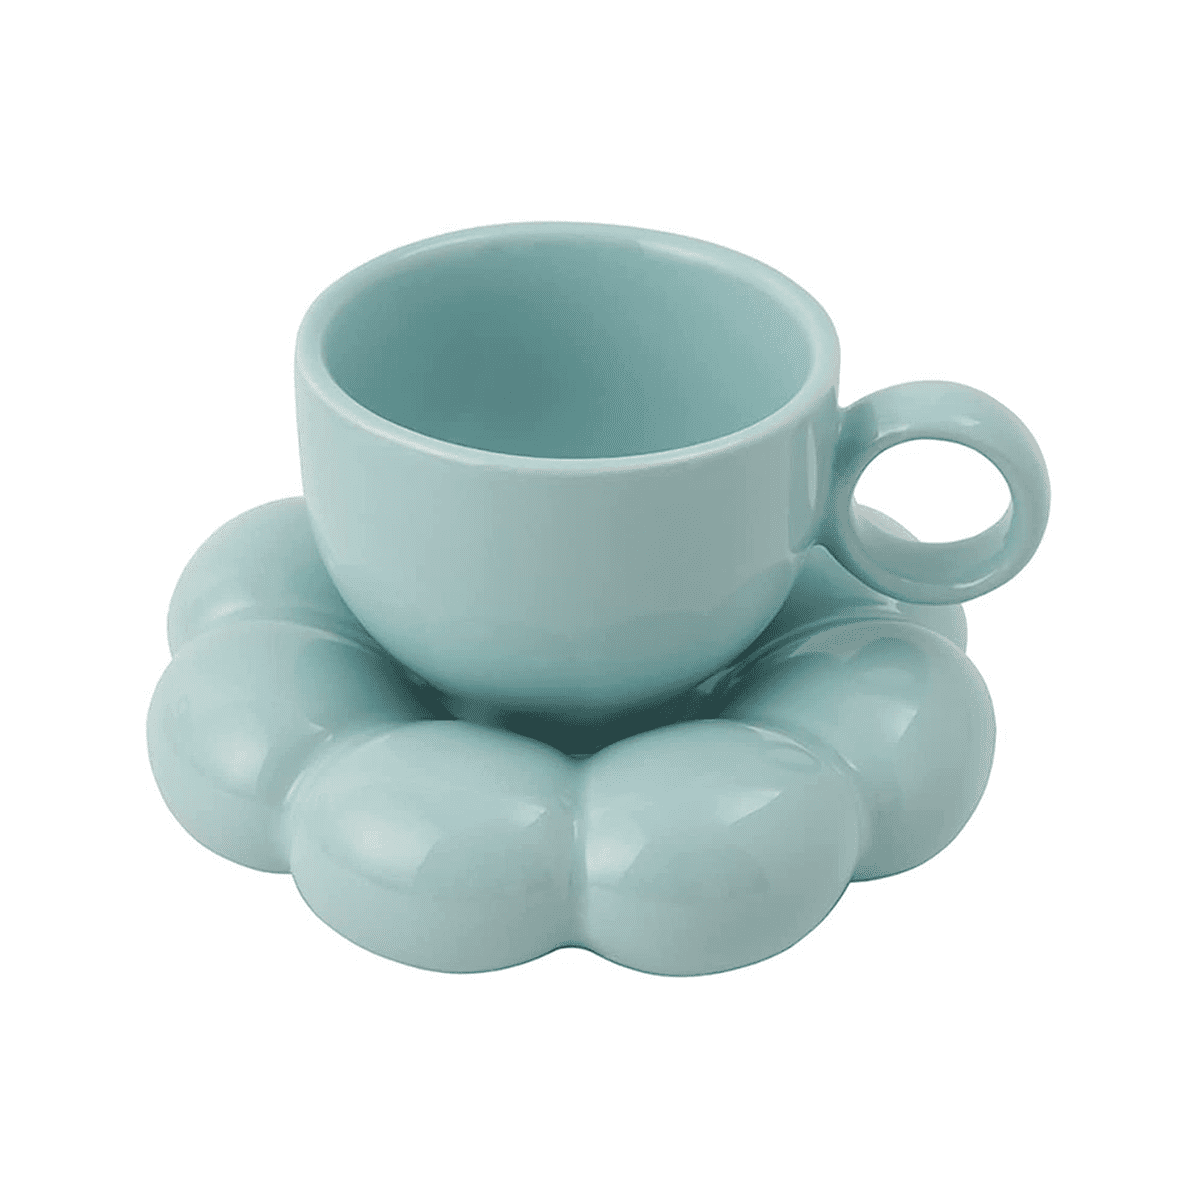 Ceramic Cloud Mug, Flower Coffee Mug and Saucer Set, Creative Cute Coffee  Cups with Sunflower Coaster, Espresso Cups for Latte, Tea, Milk, Gifts 